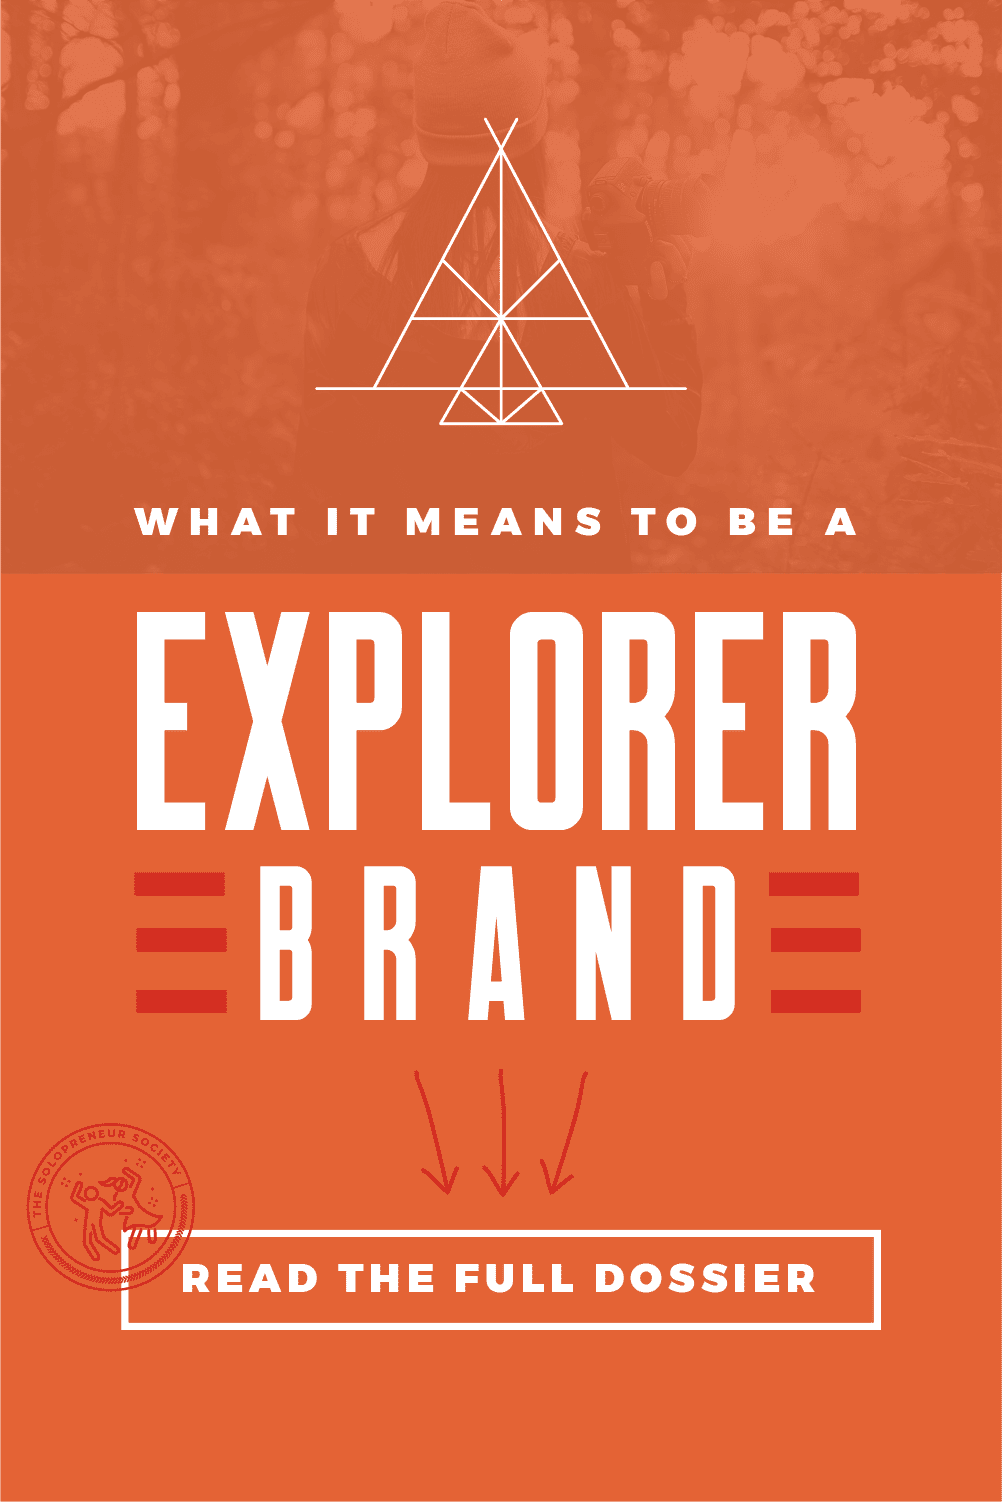 Explorer Archetype Brand Personality